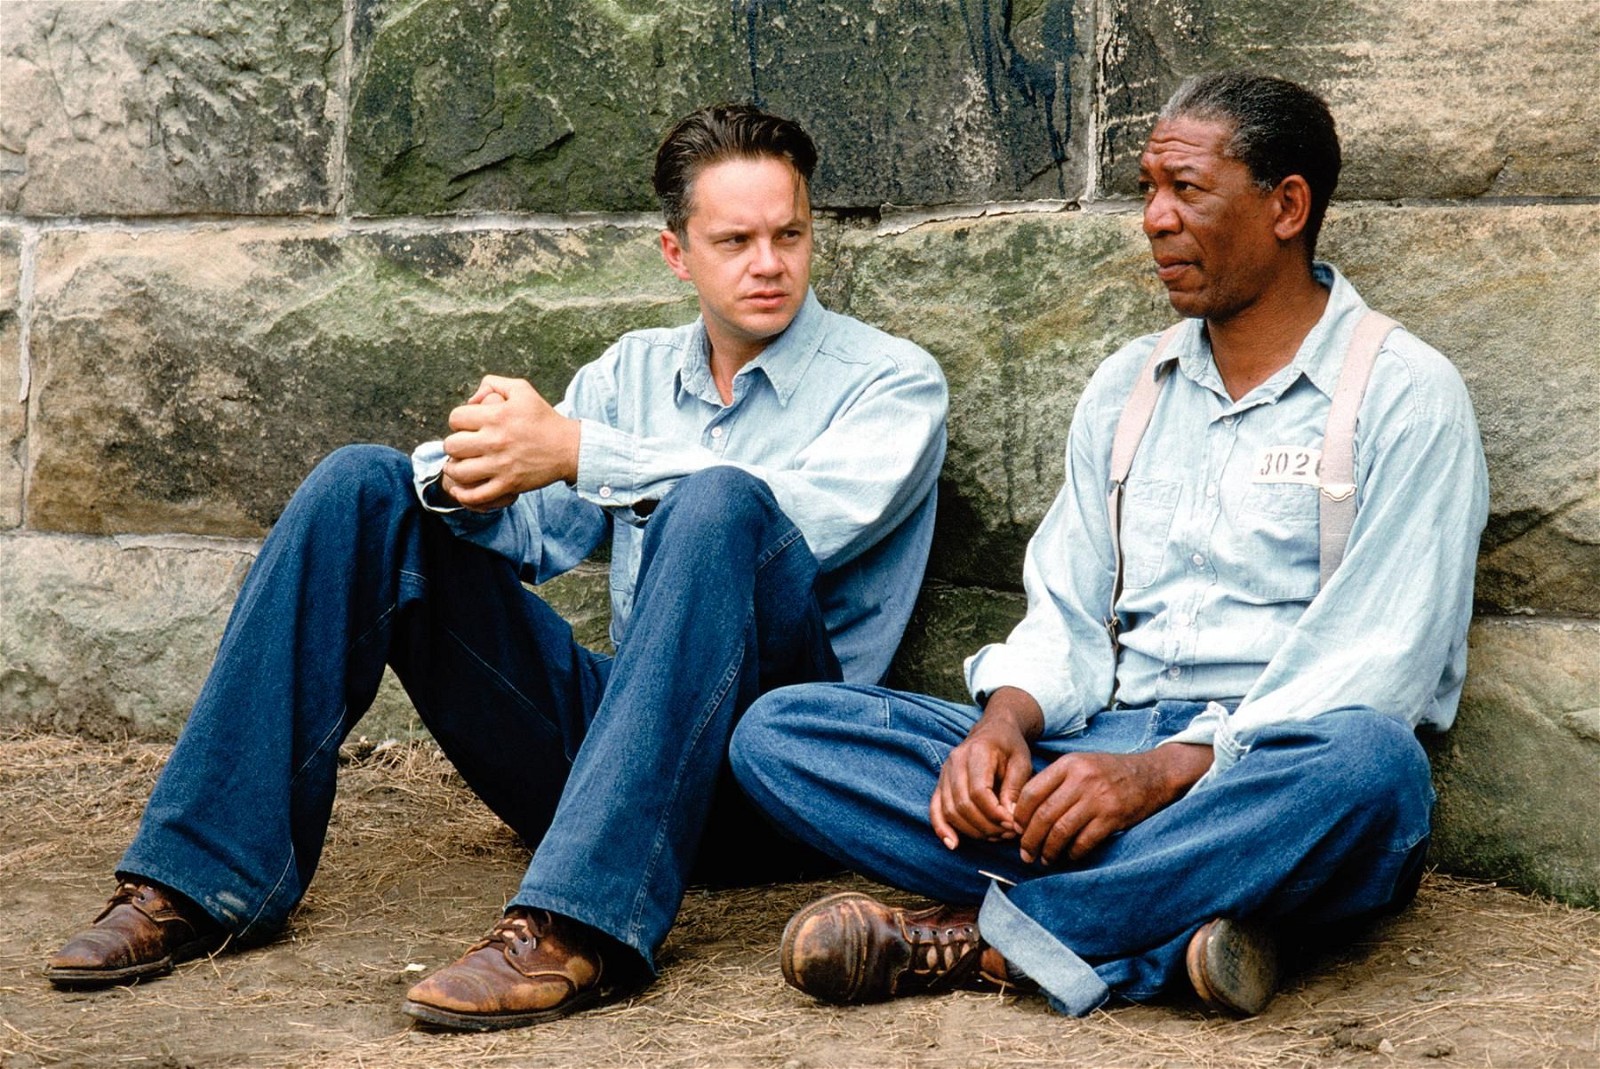 Tim Robbins and Morgan Freeman in a still from The Shawshank Redemption